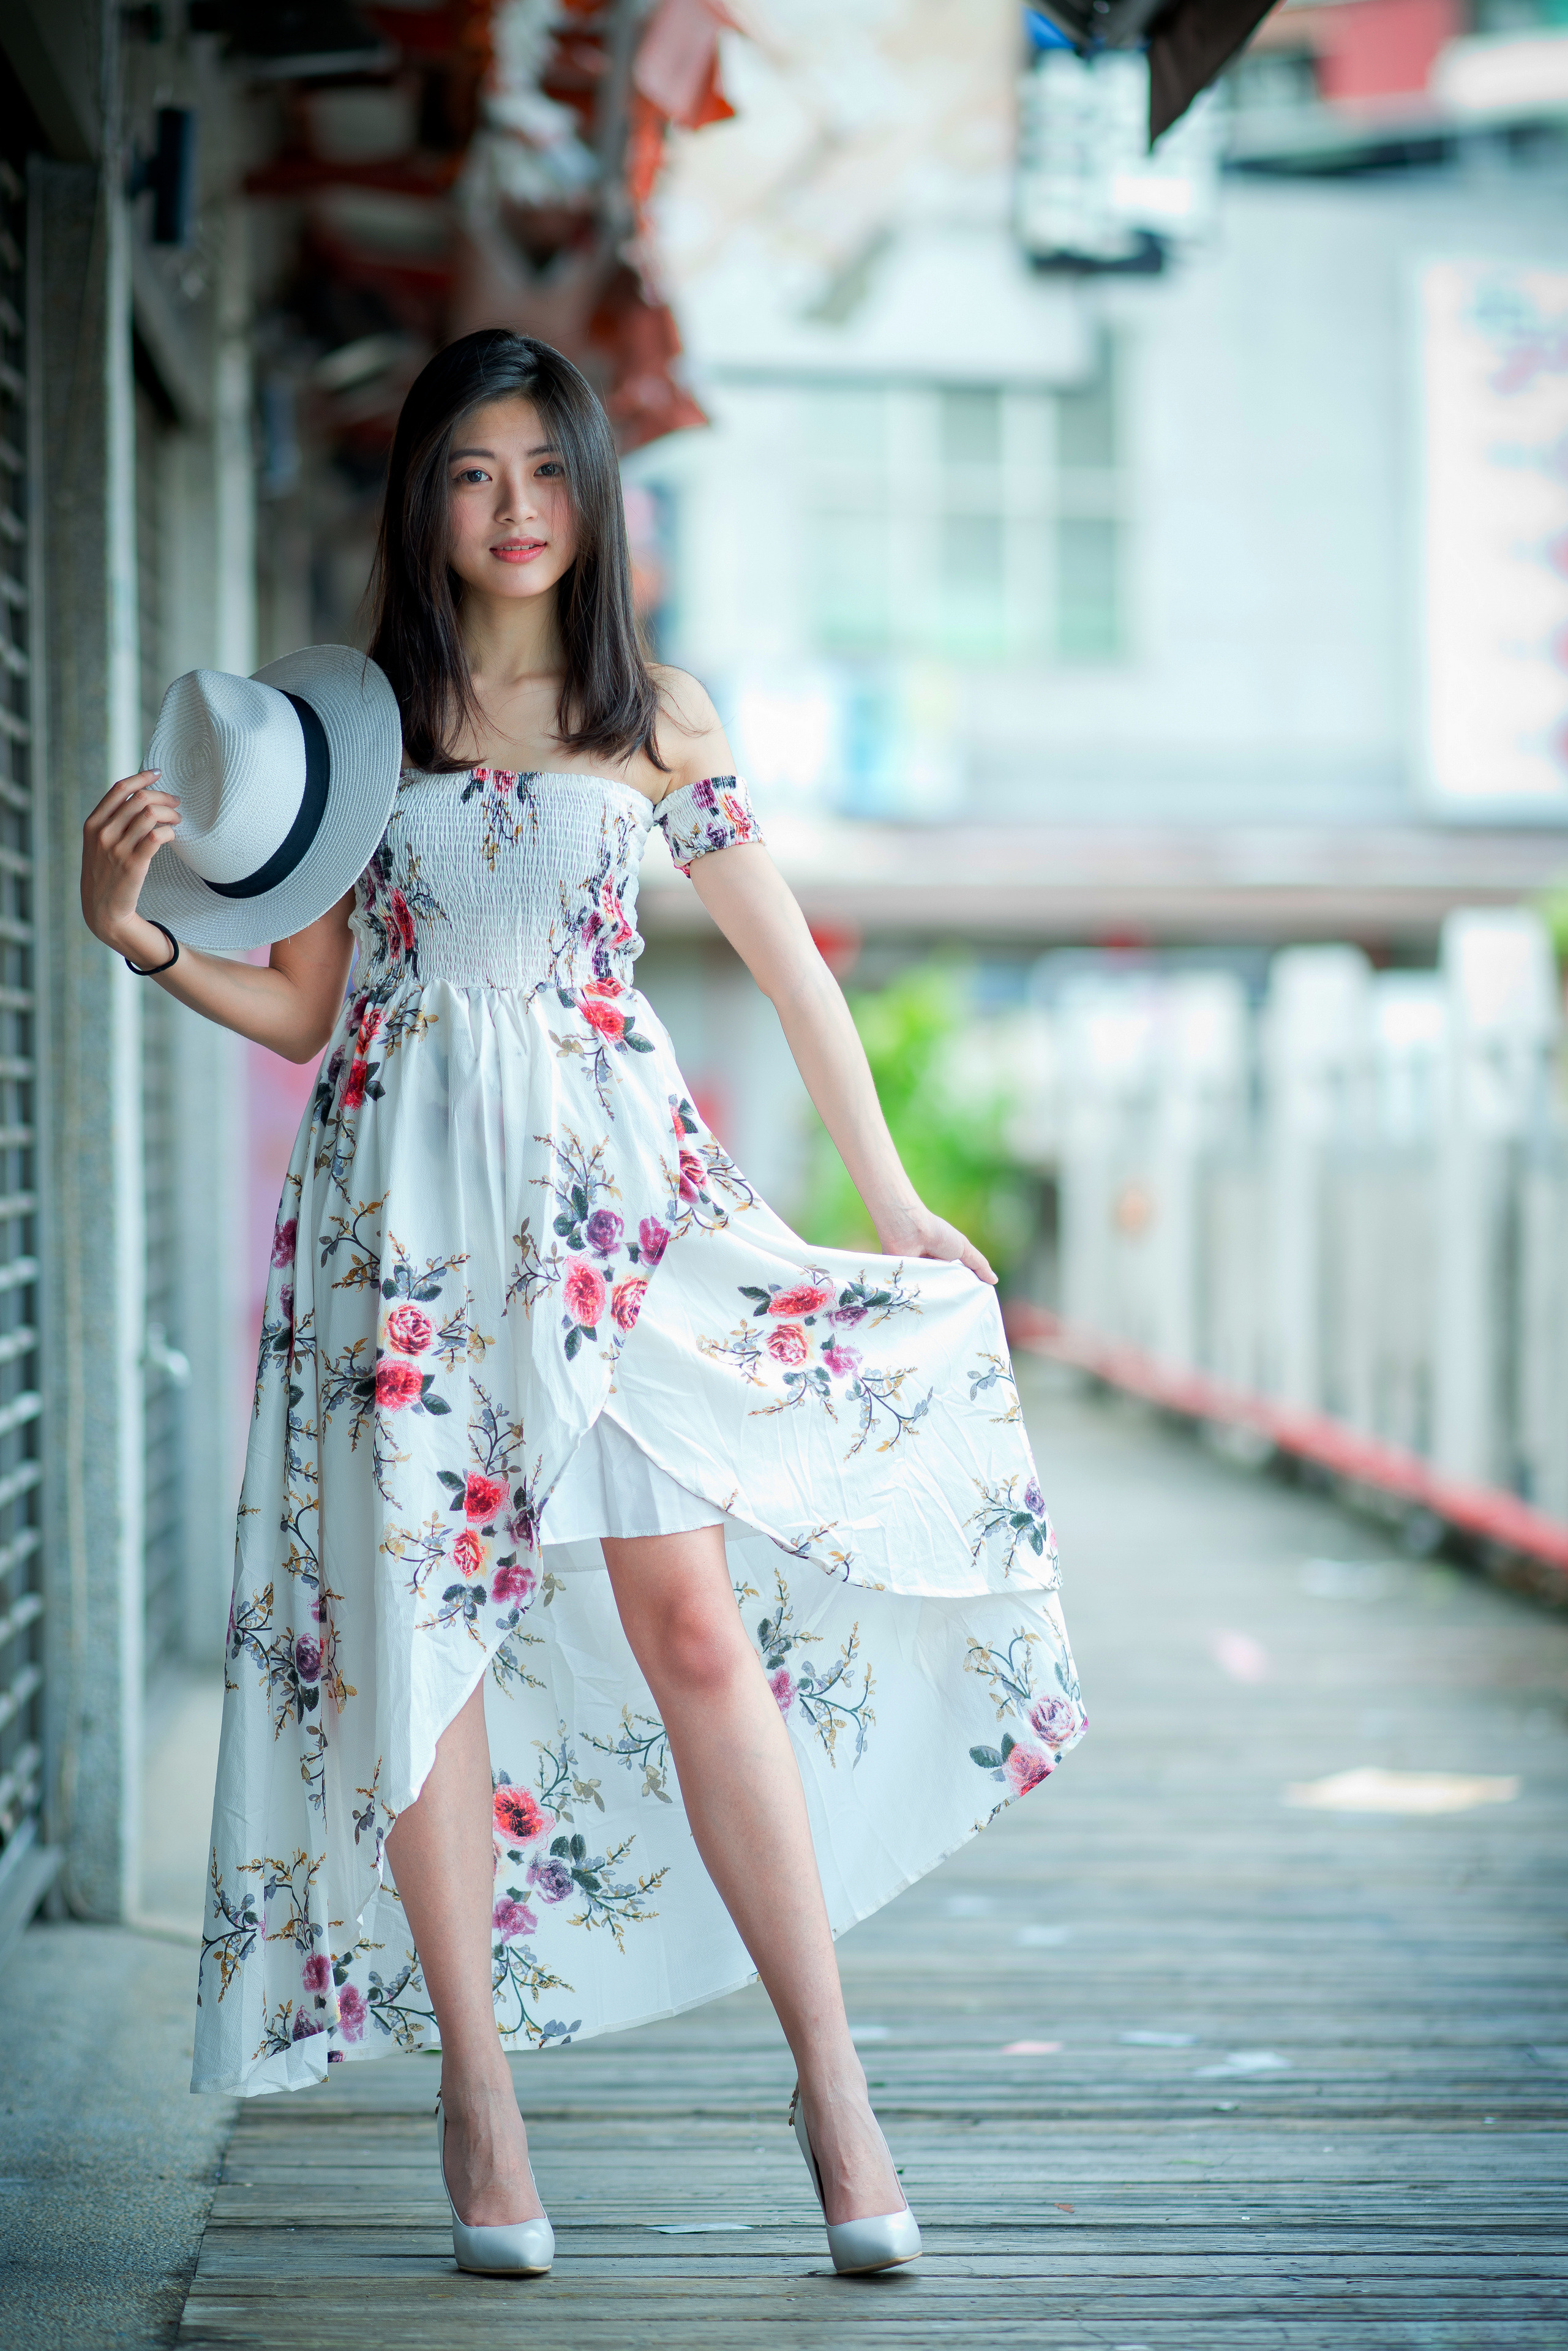 Asian Model Women Long Hair Dark Hair Depth Of Field Hat Flower Dress White Heels High Heels 2561x3840